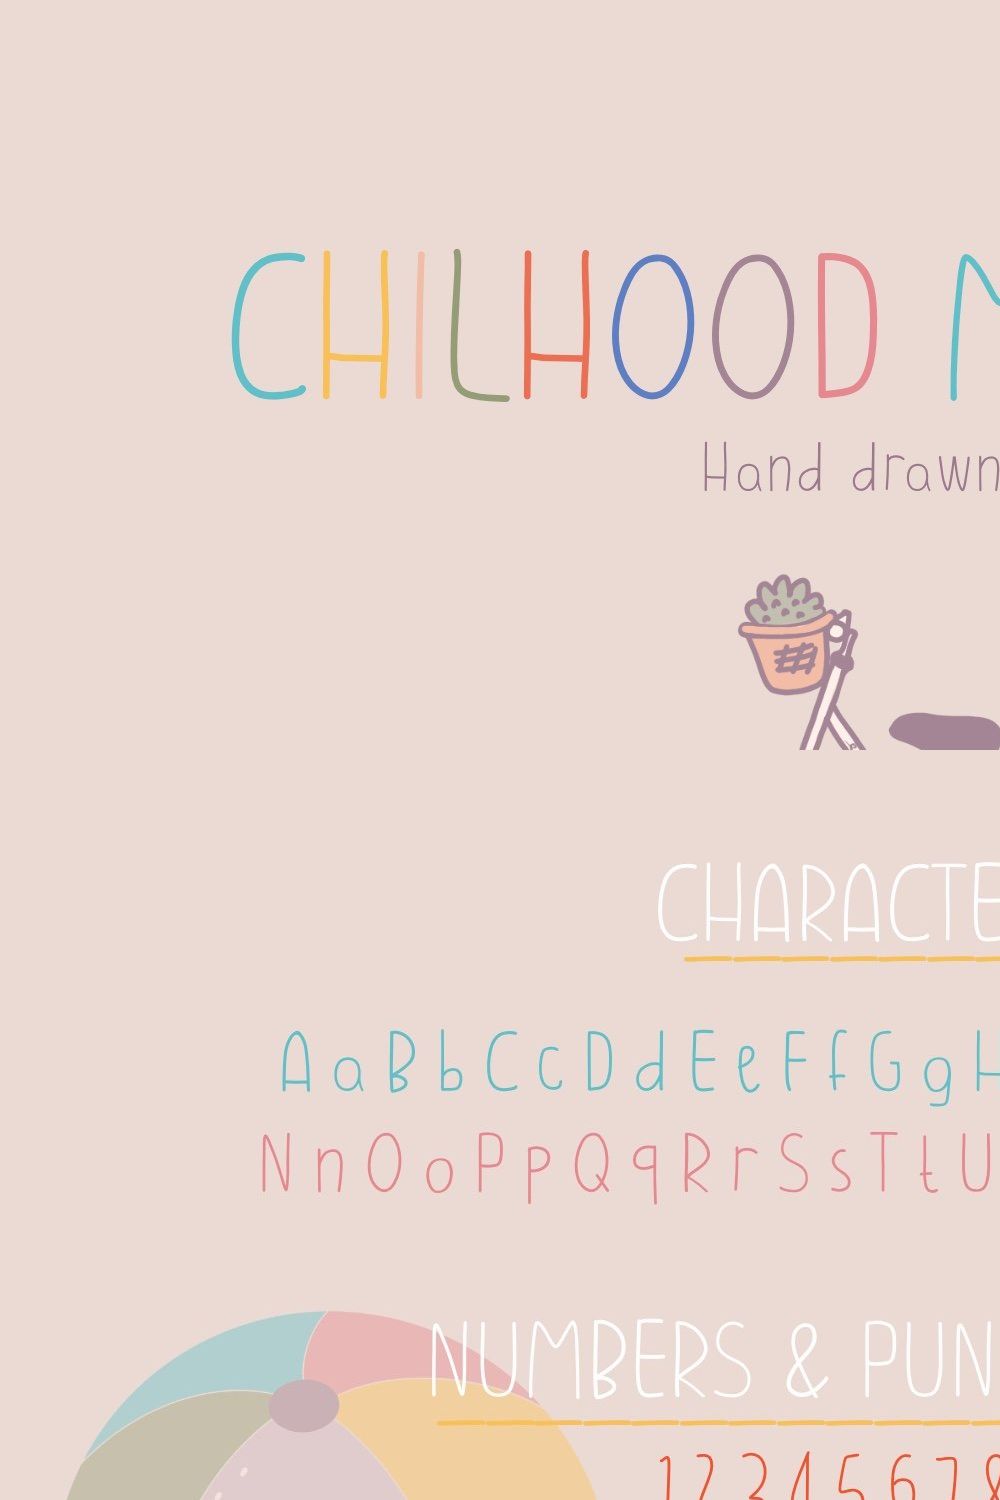 CHILHOOD MEMORIES | Kids Font pinterest preview image.